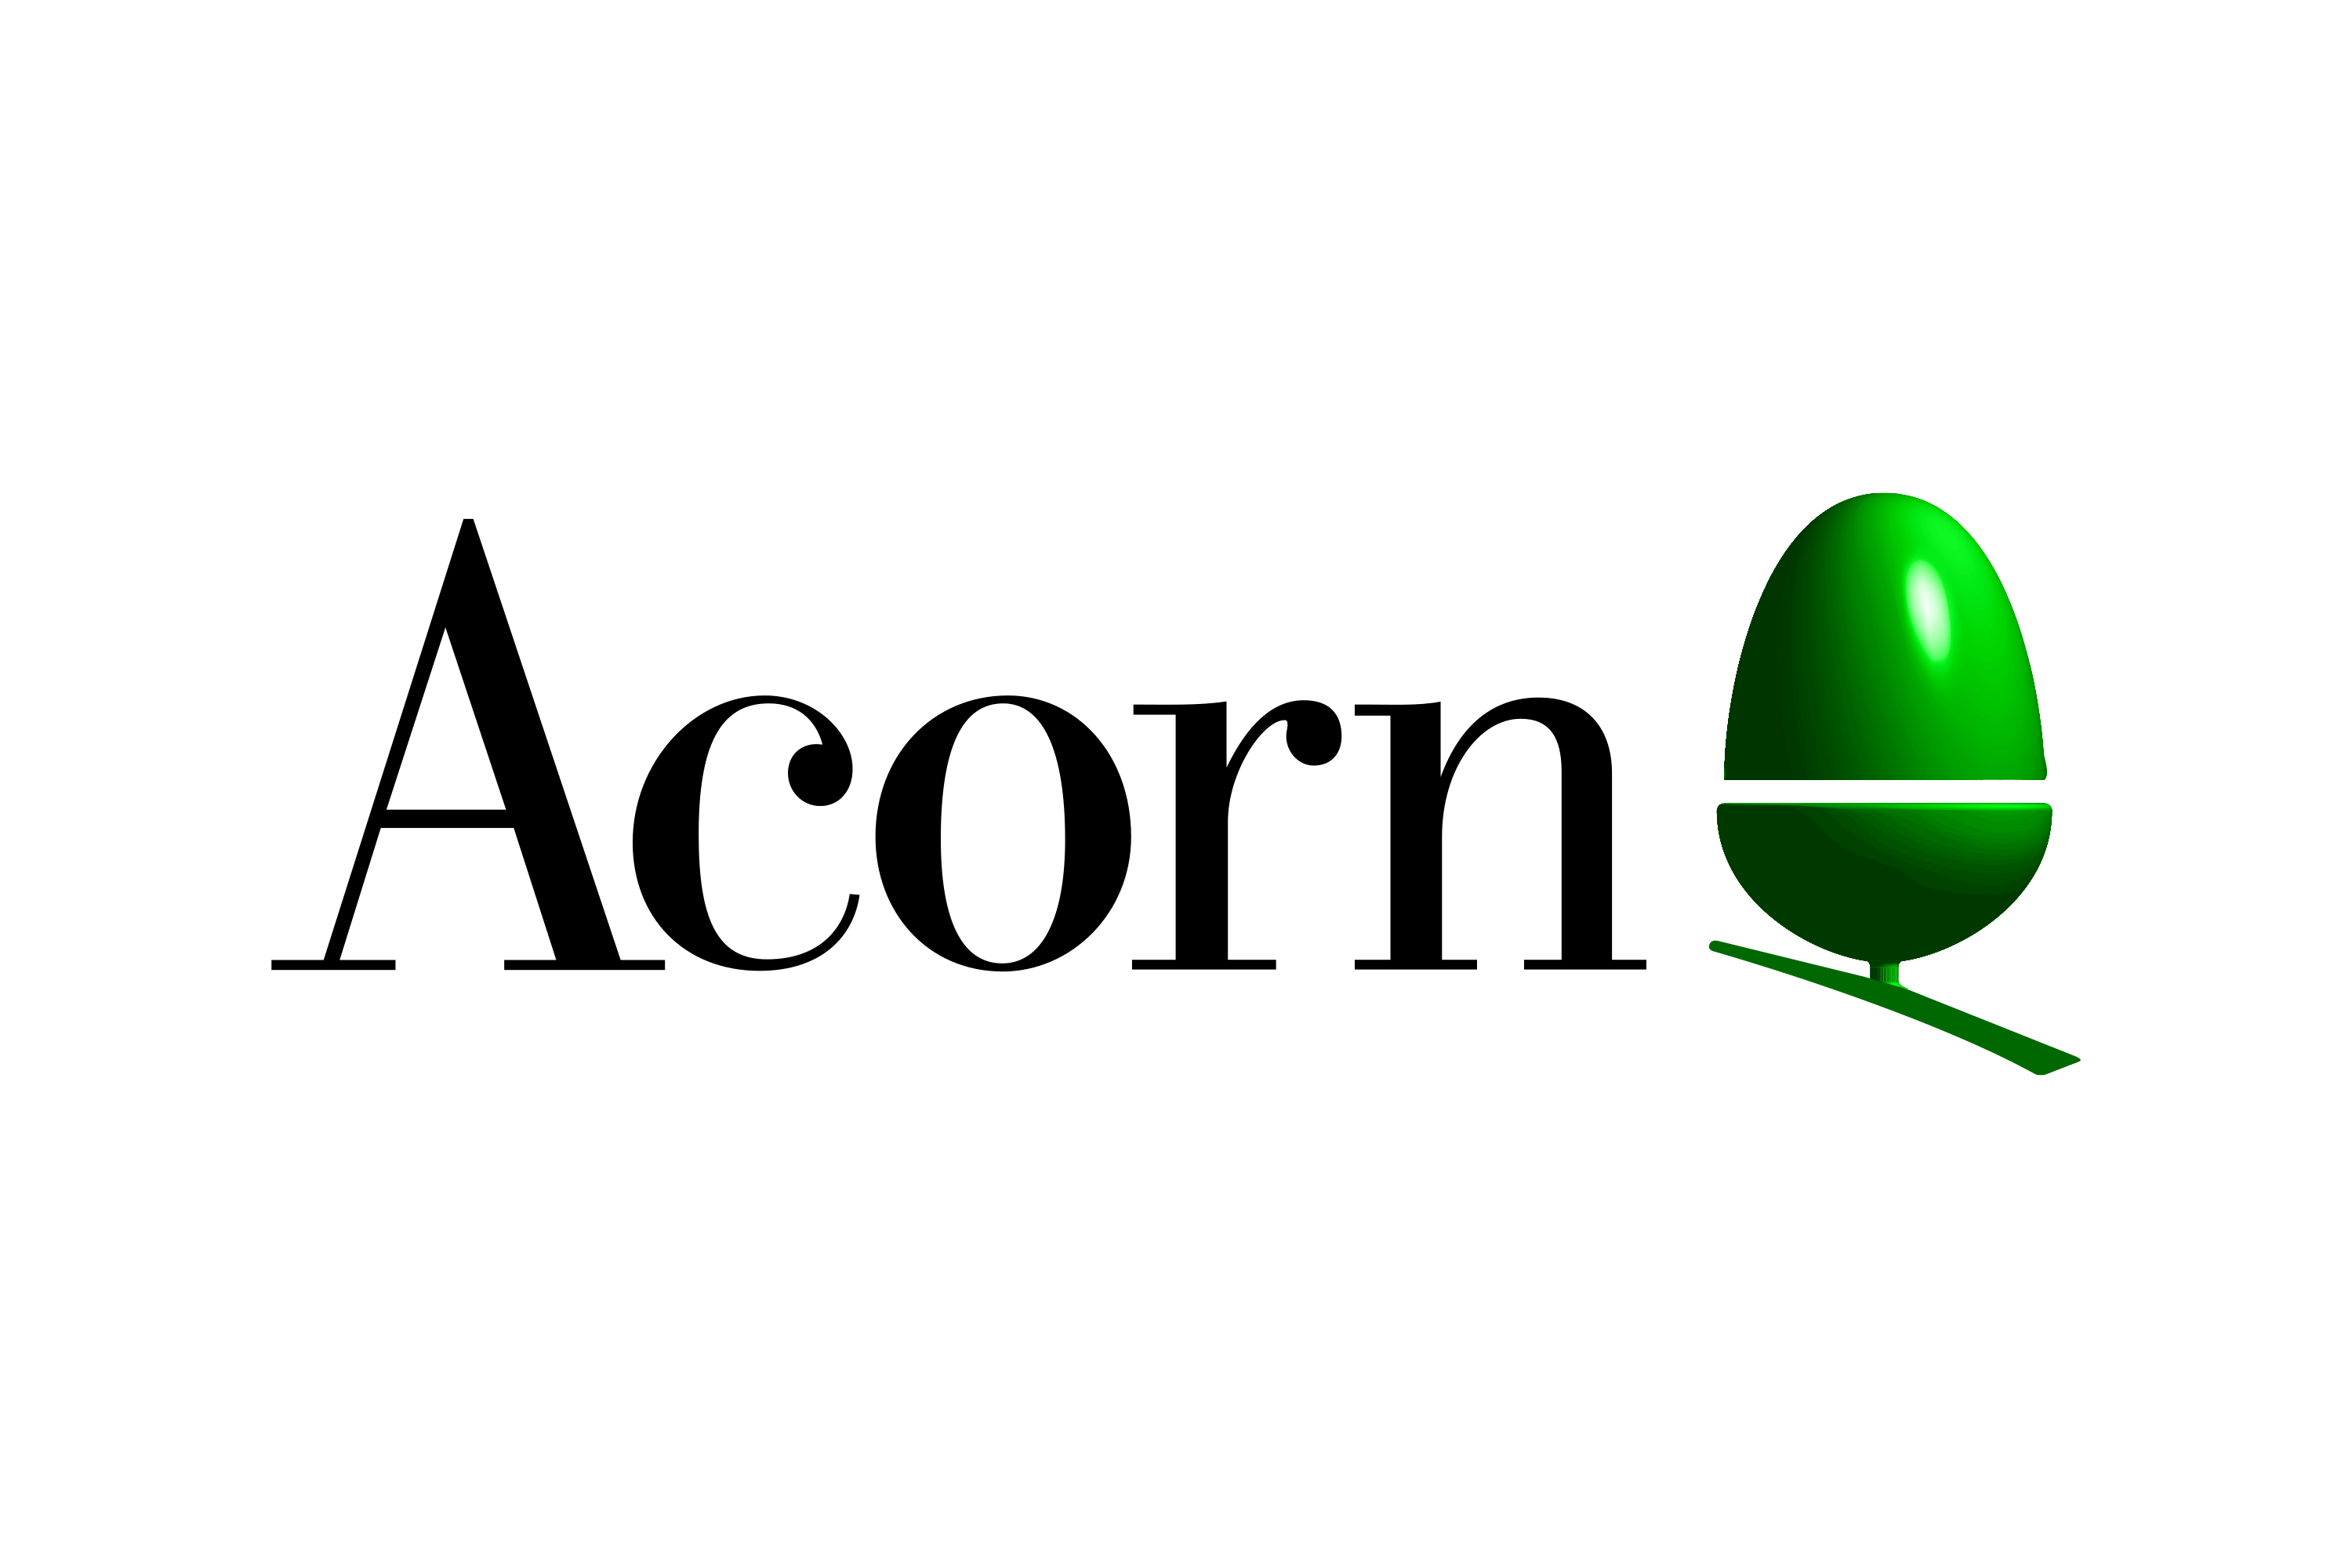 Download Acorn computers Logo in SVG Vector or PNG File Format - Logo.wine